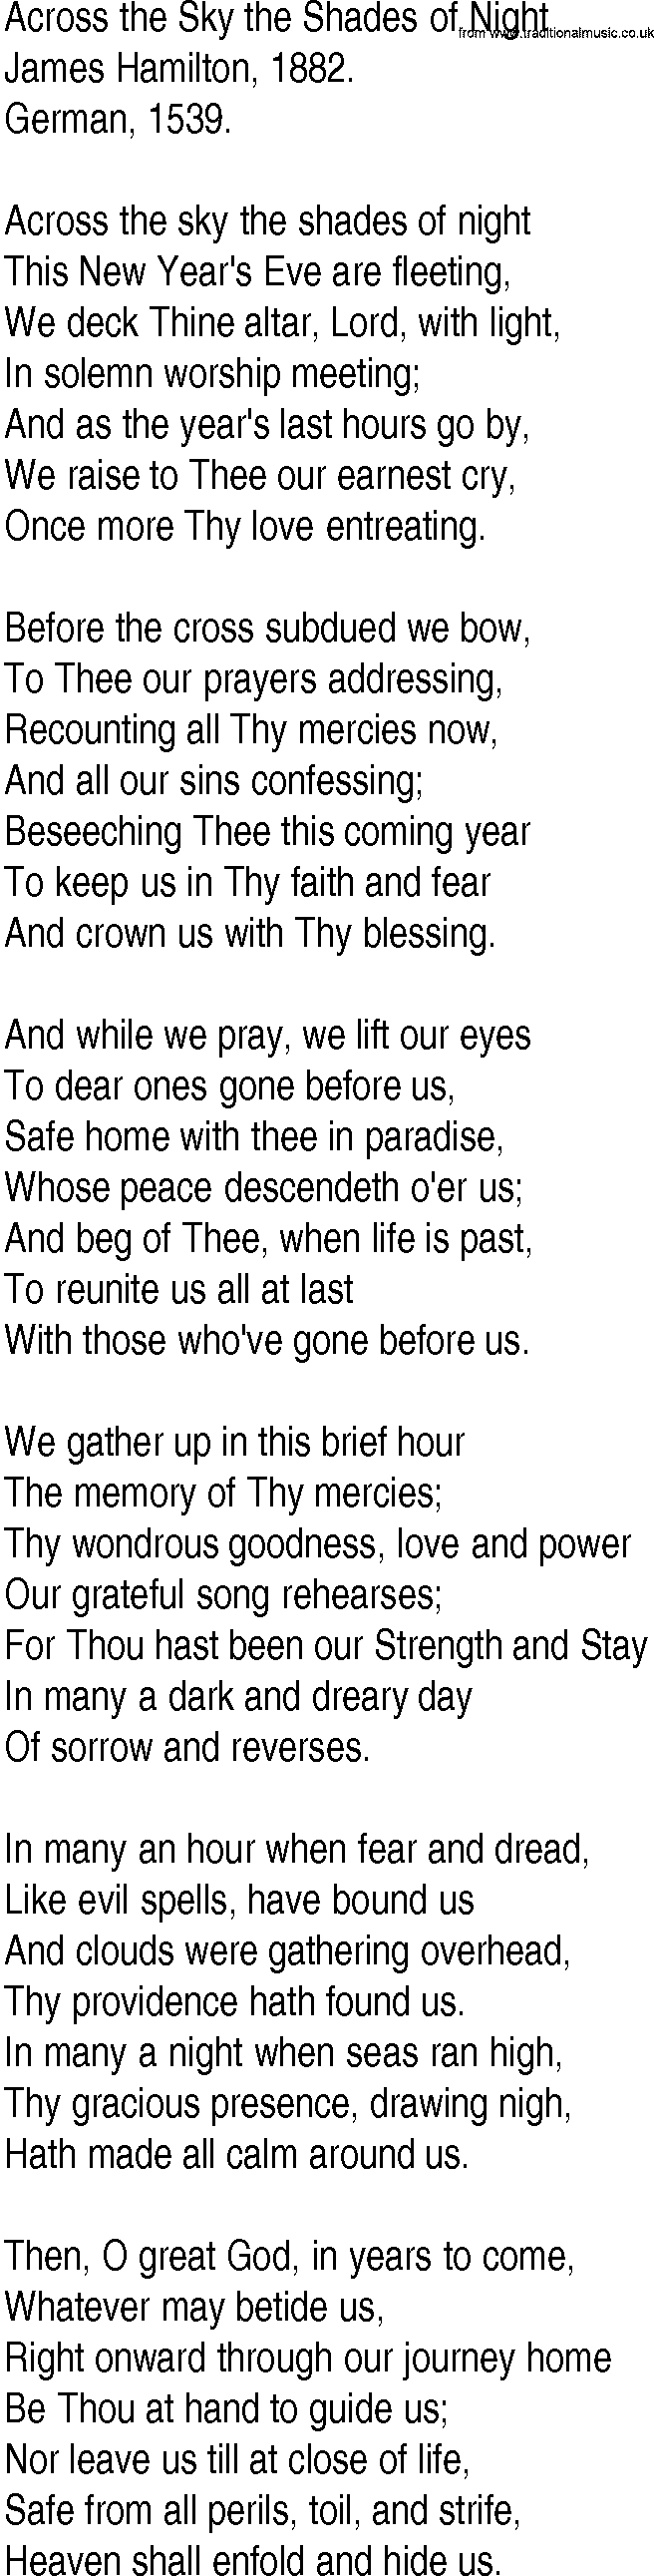 Hymn and Gospel Song: Across the Sky the Shades of Night by James Hamilton lyrics